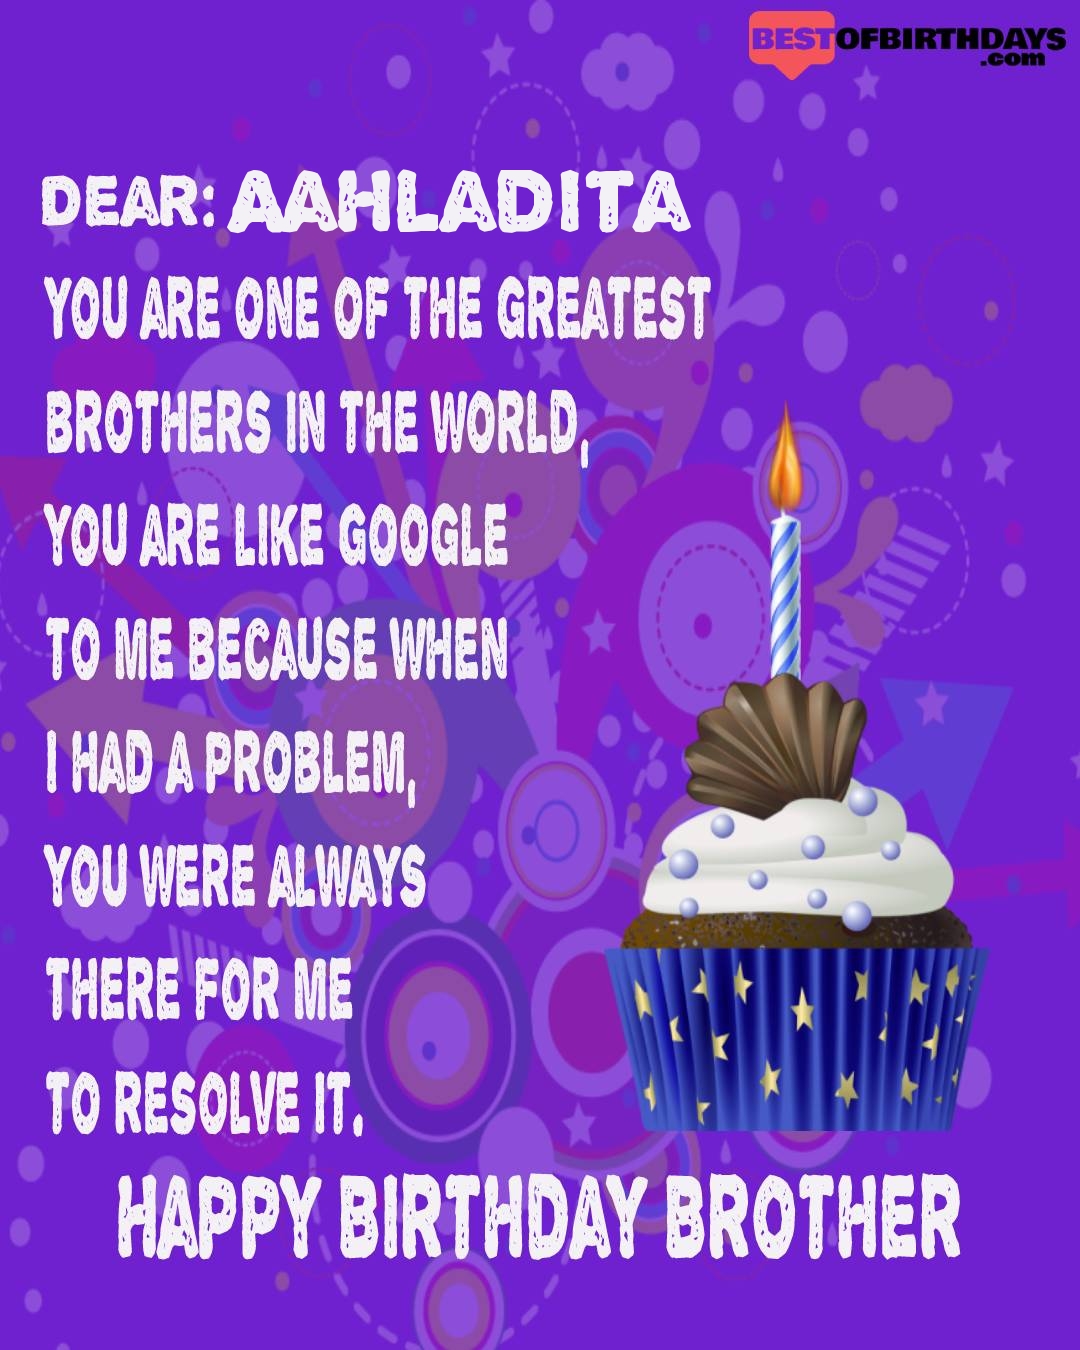 Happy birthday aahladita bhai brother bro